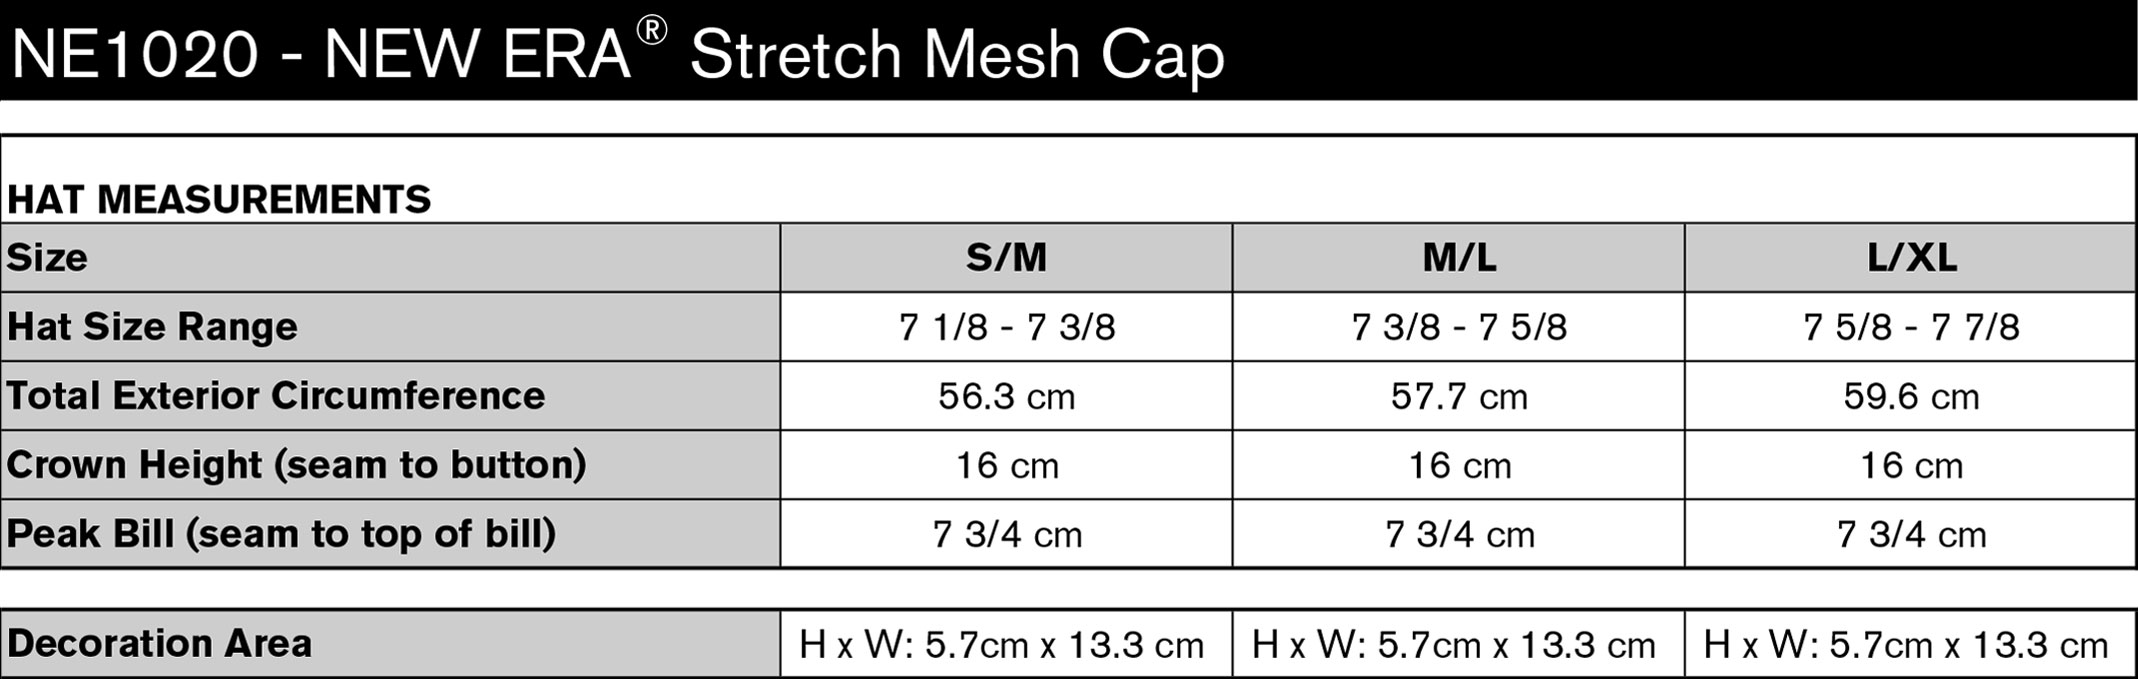 New Era Stretch Mesh Cap Specs Sheet